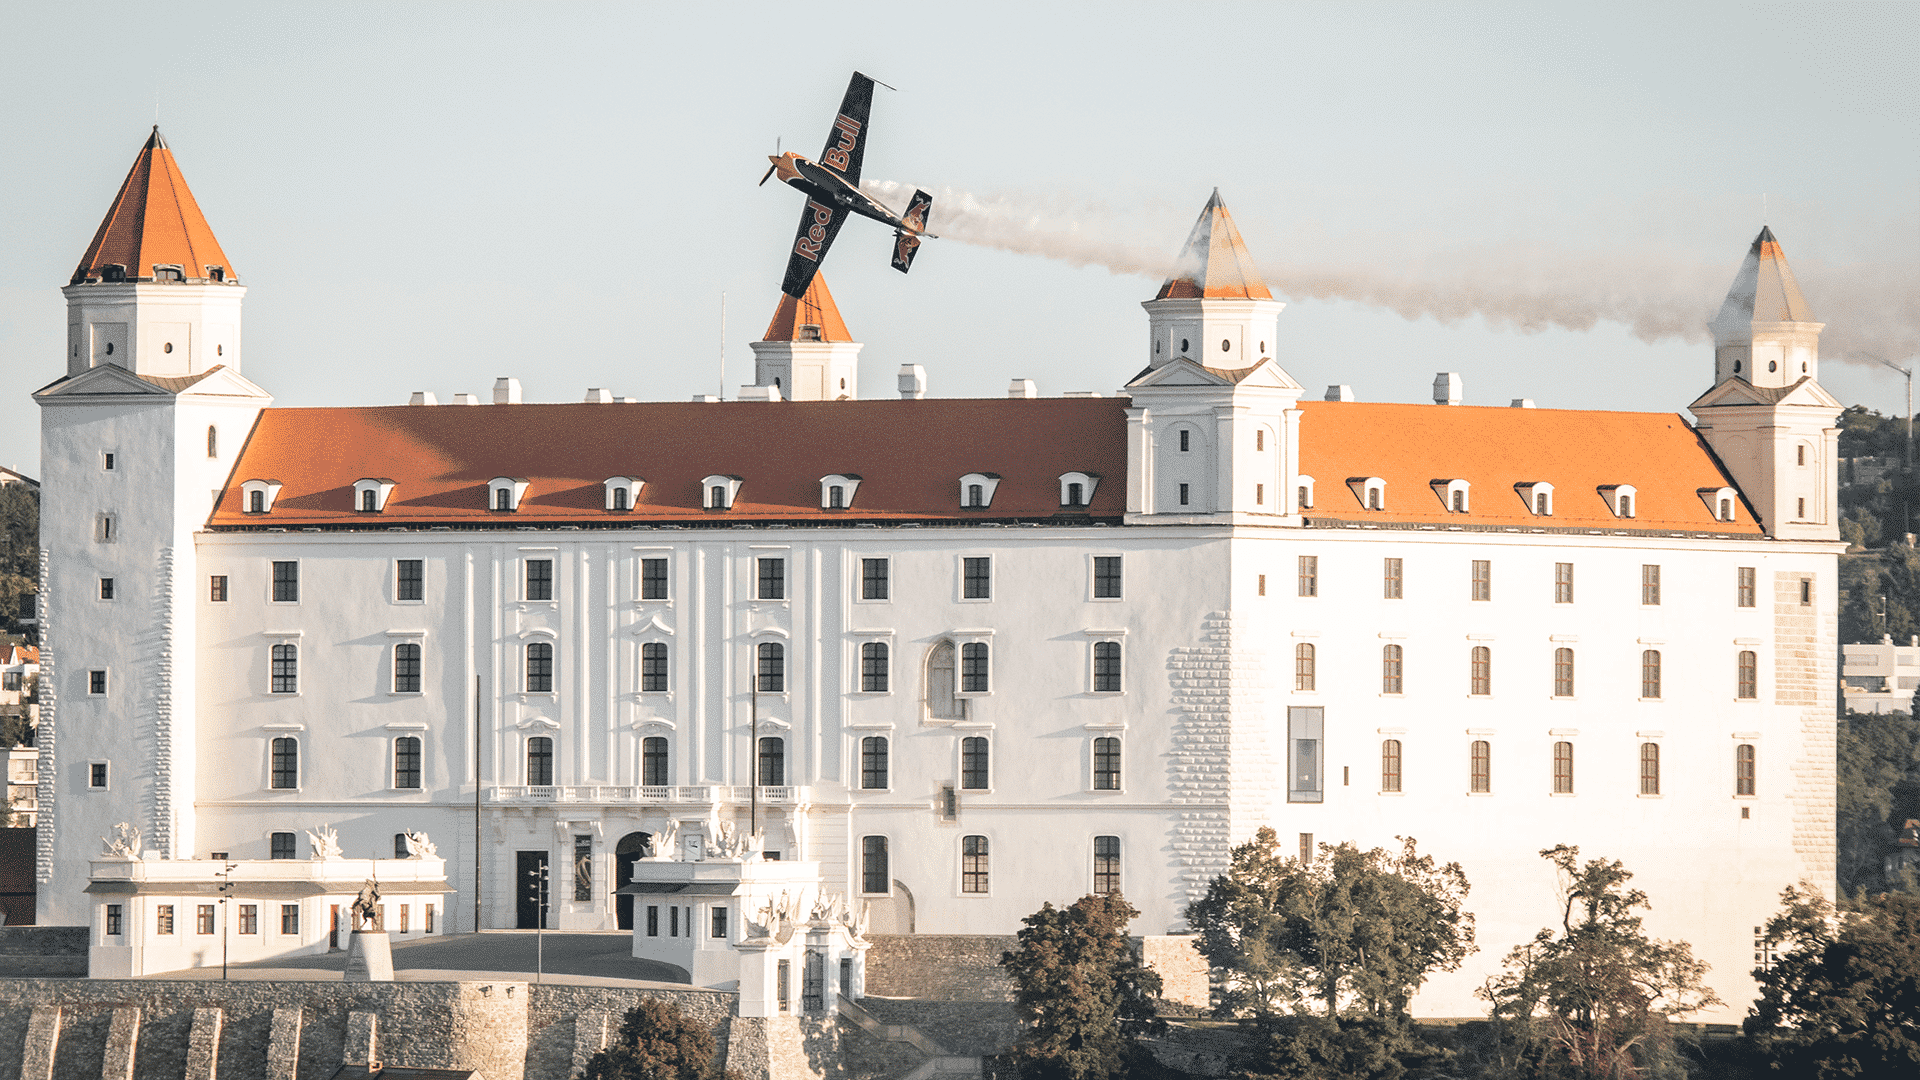 Letecká šou nad Bratislavou